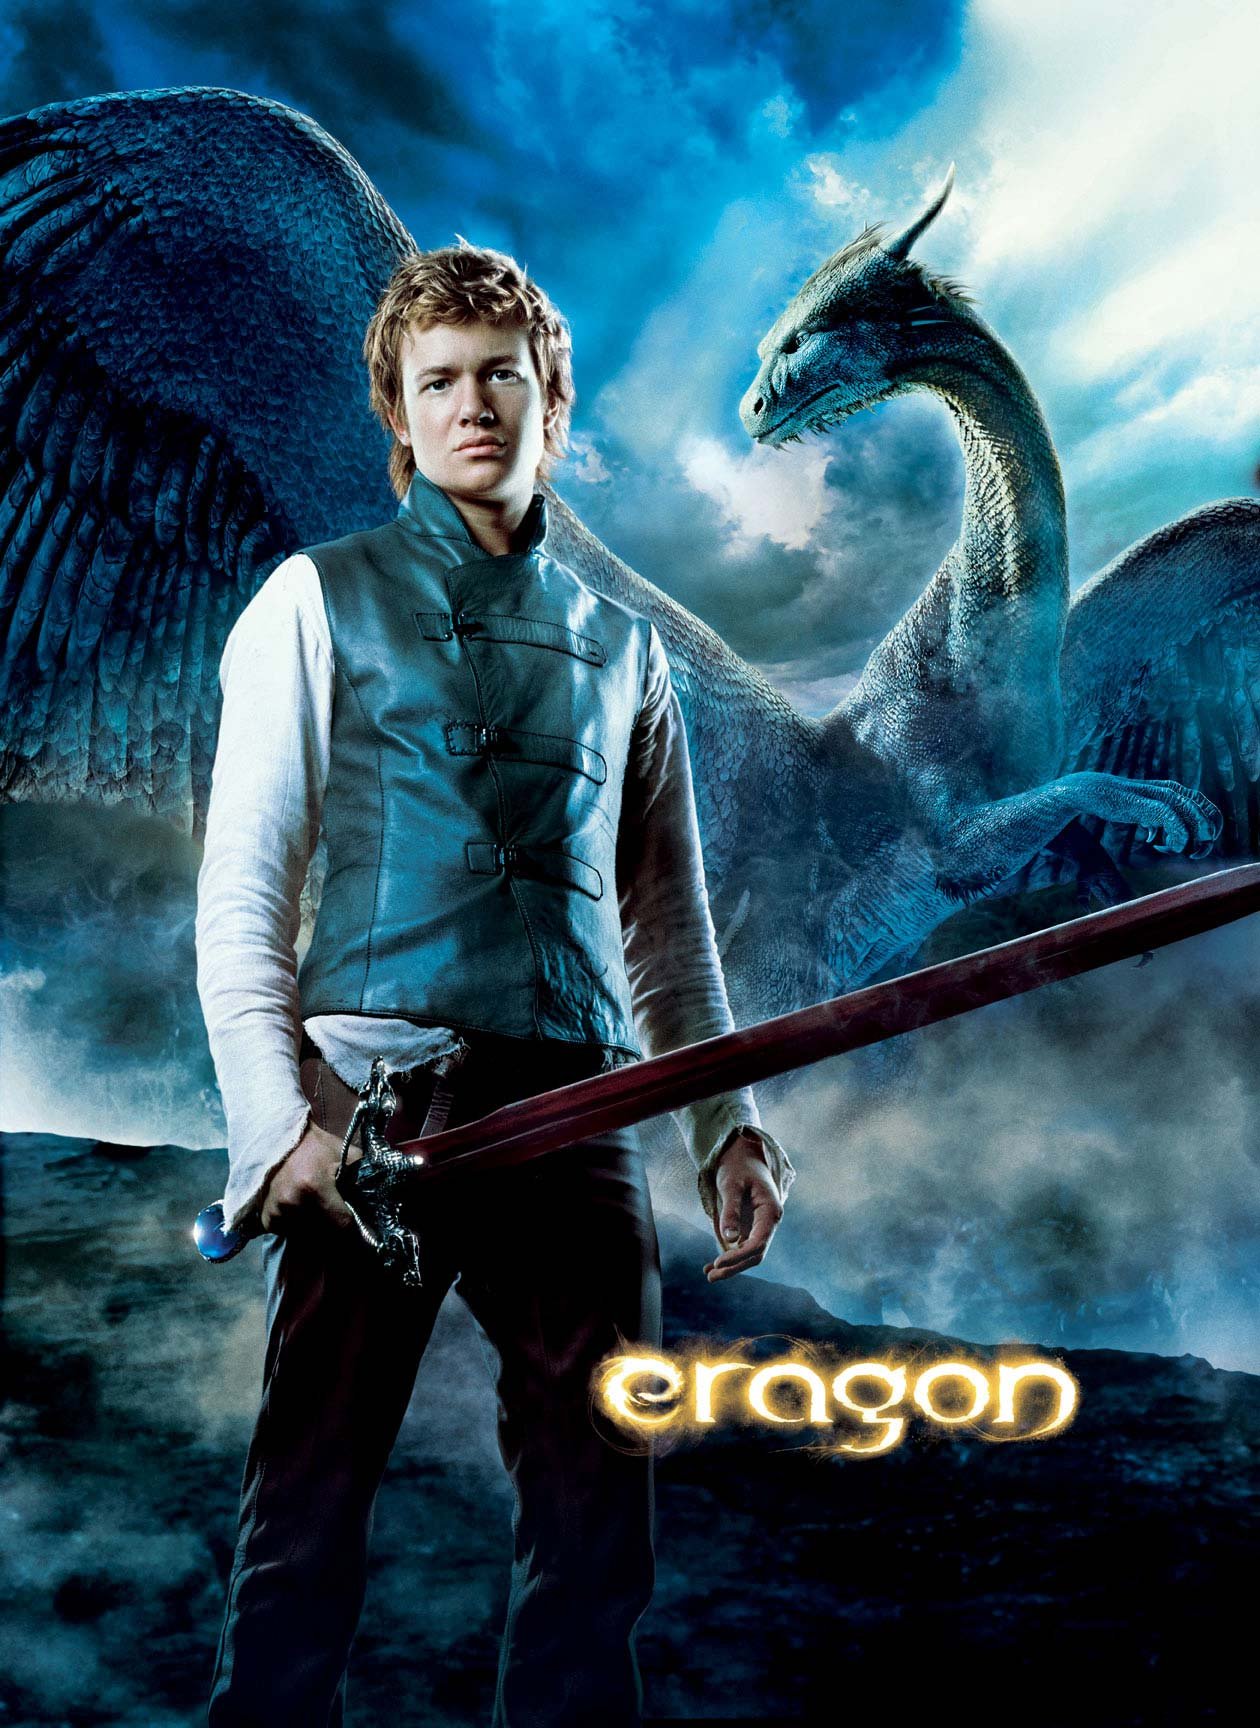 Eragon (2006) poster - FreeMoviePosters.net